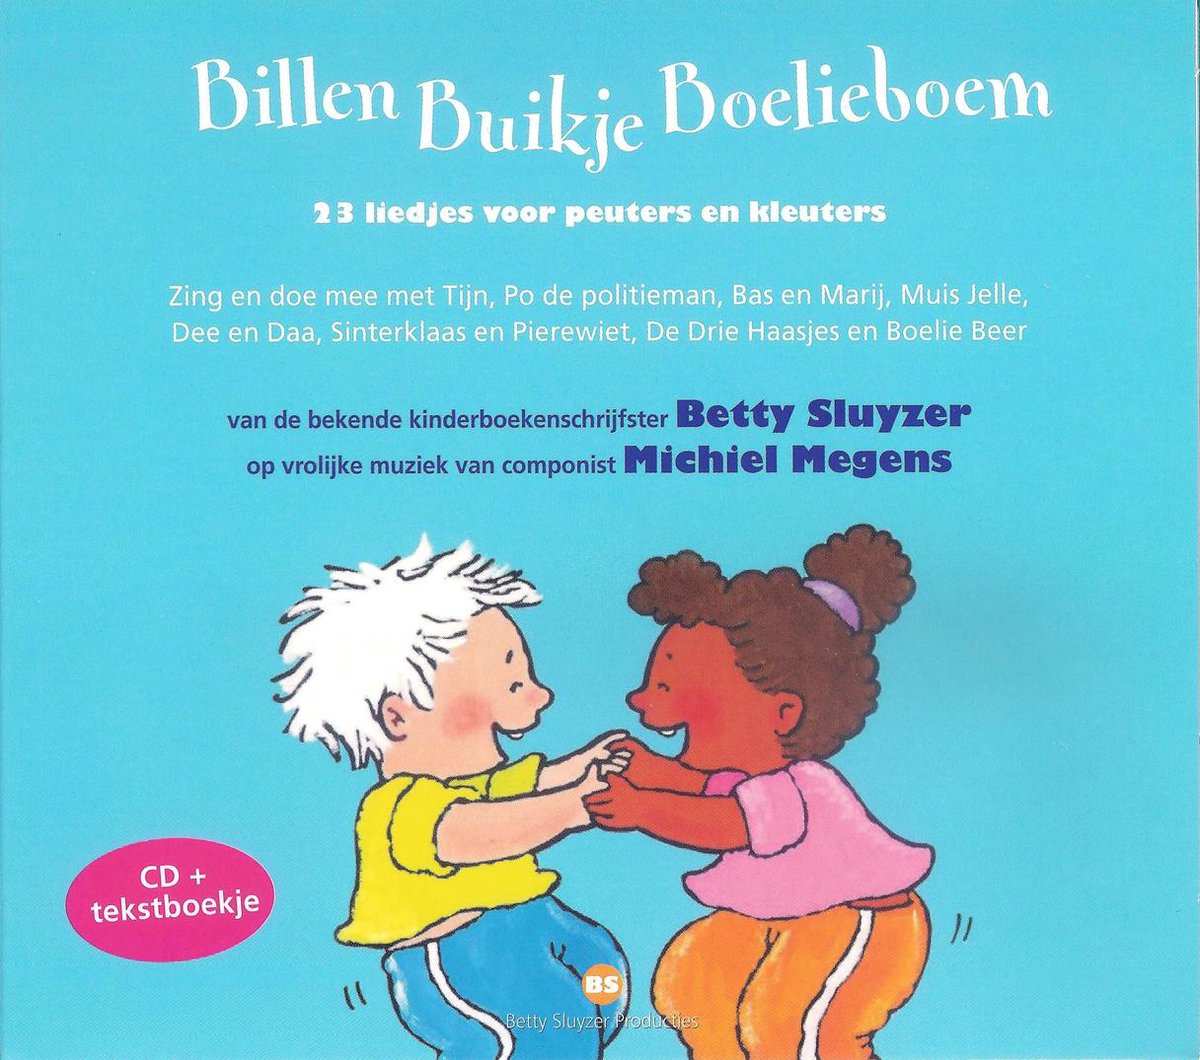 CD Billen Buikje Boelieboem: 23 liedjes voor peuters en kleuters van Betty Sluyzer - Betty Sluyzer